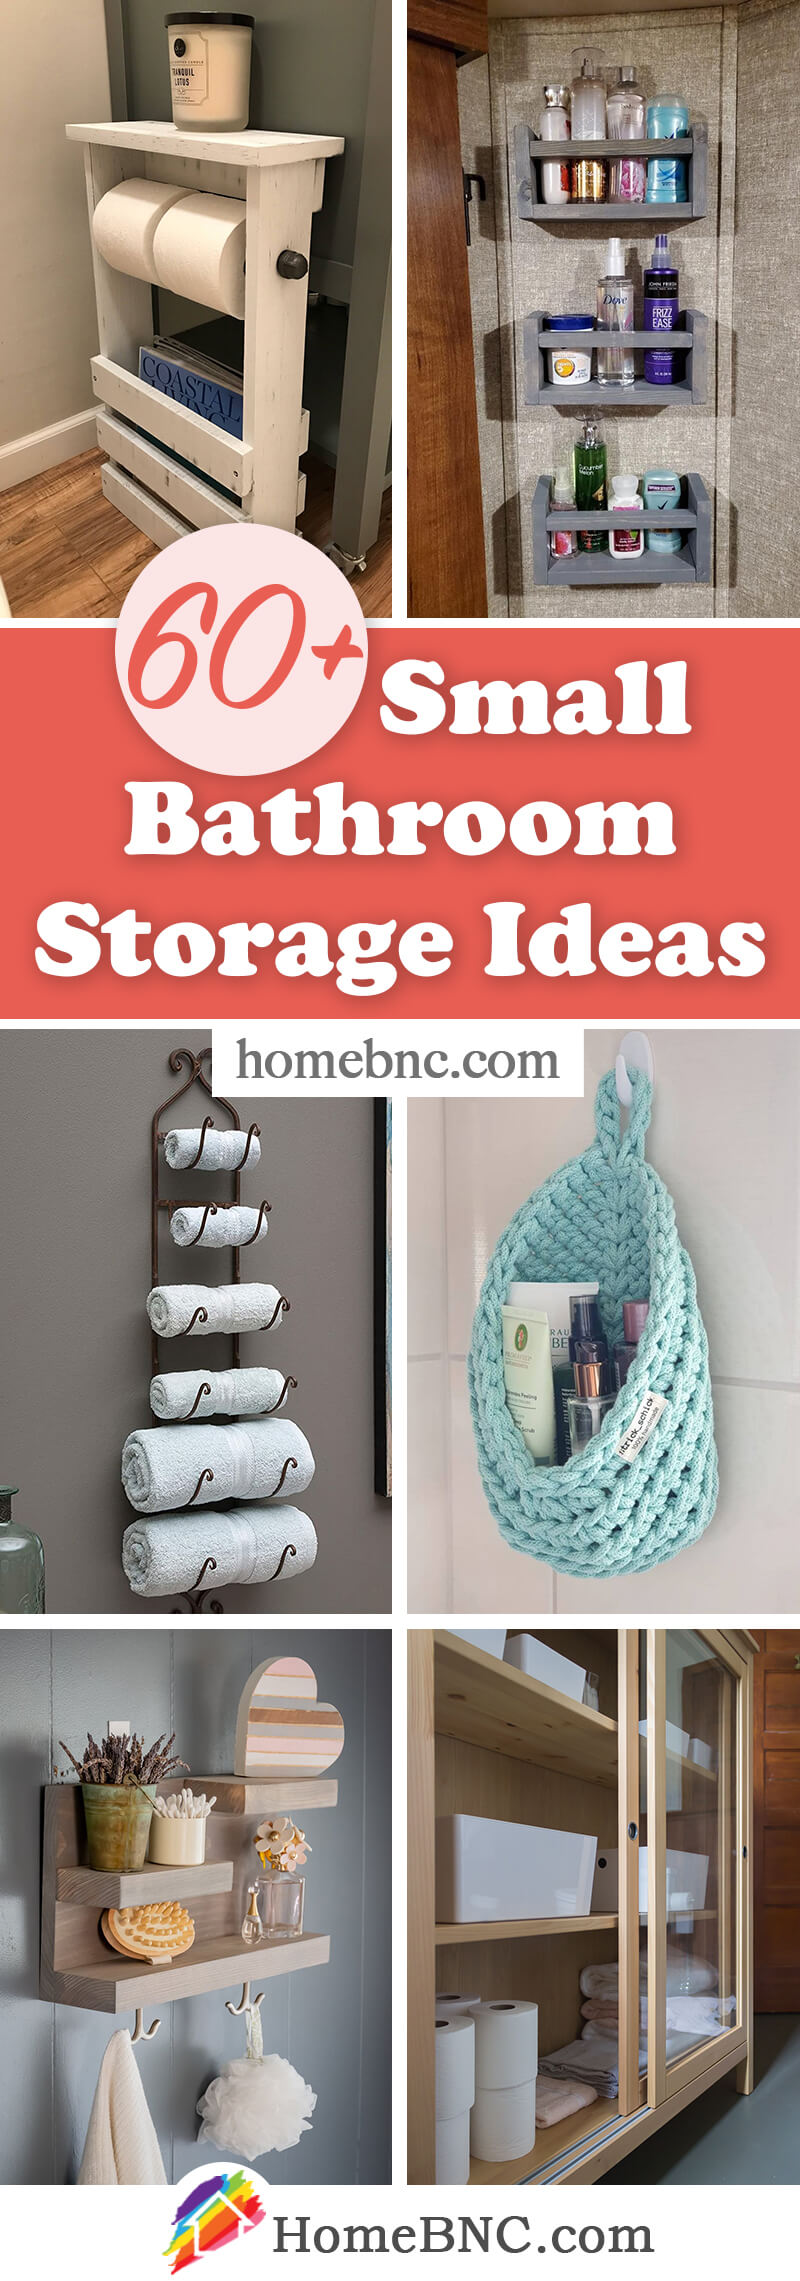 small-bathroom-storage-ideas-homebnc